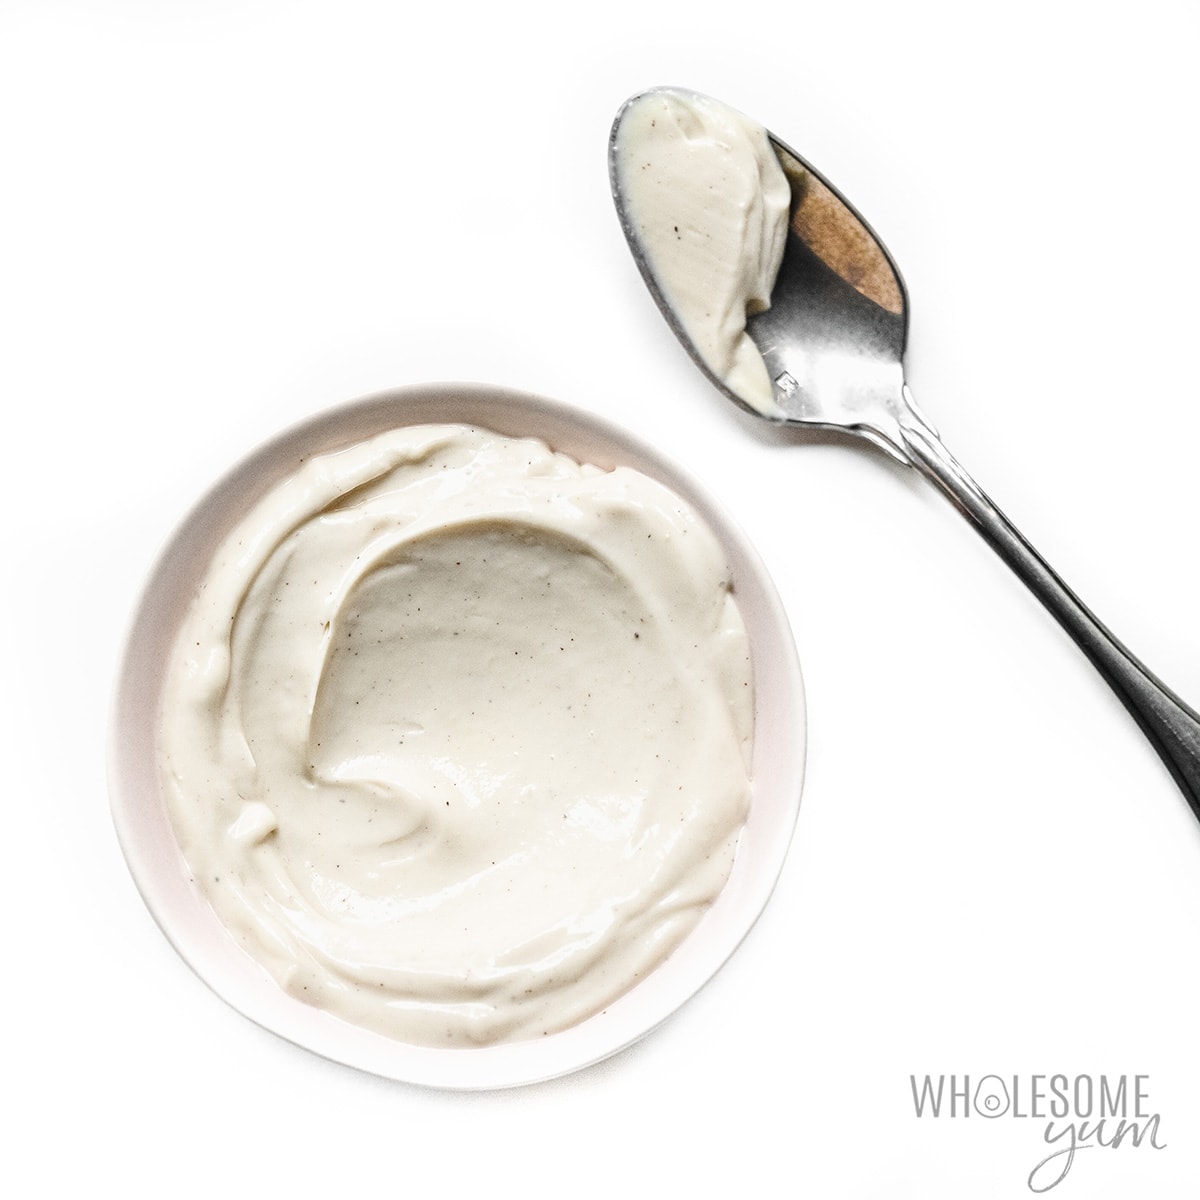 Plain Greek yogurt in a bowl.